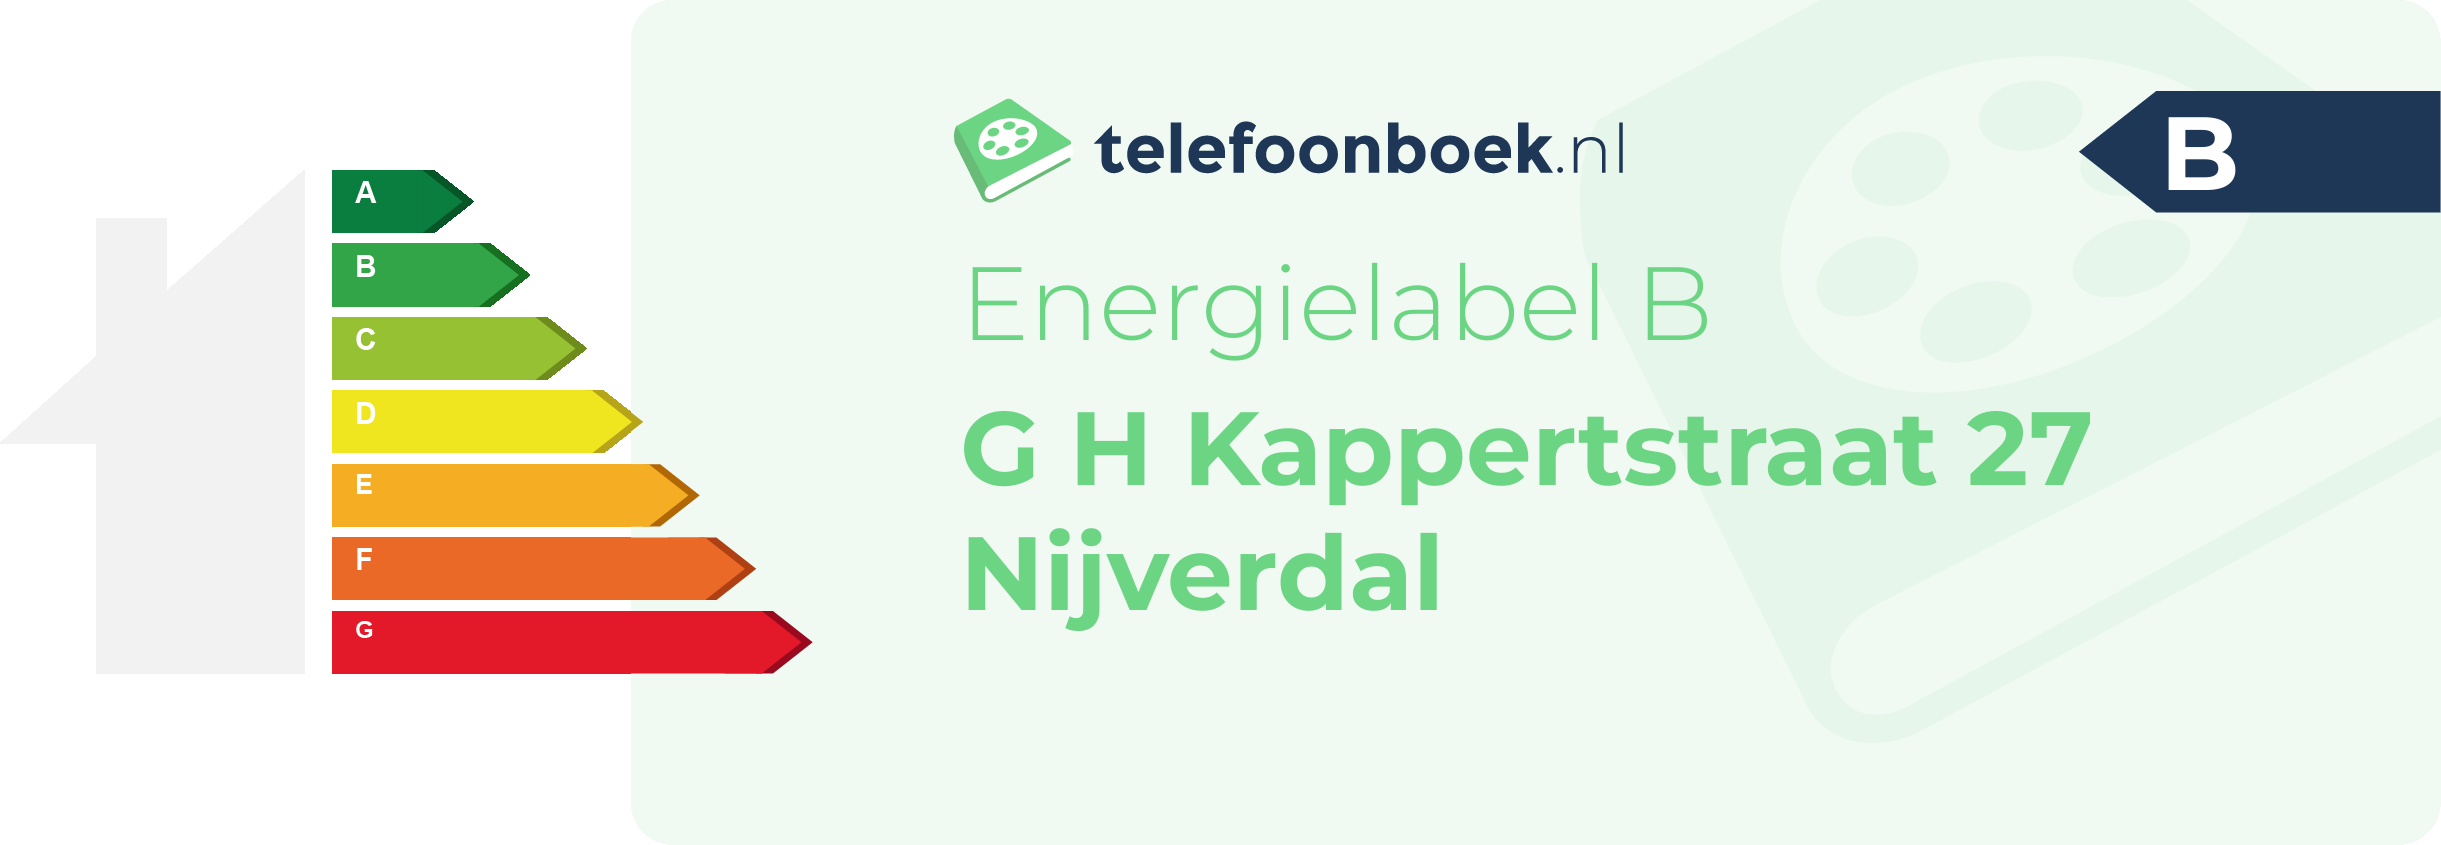 Energielabel G H Kappertstraat 27 Nijverdal